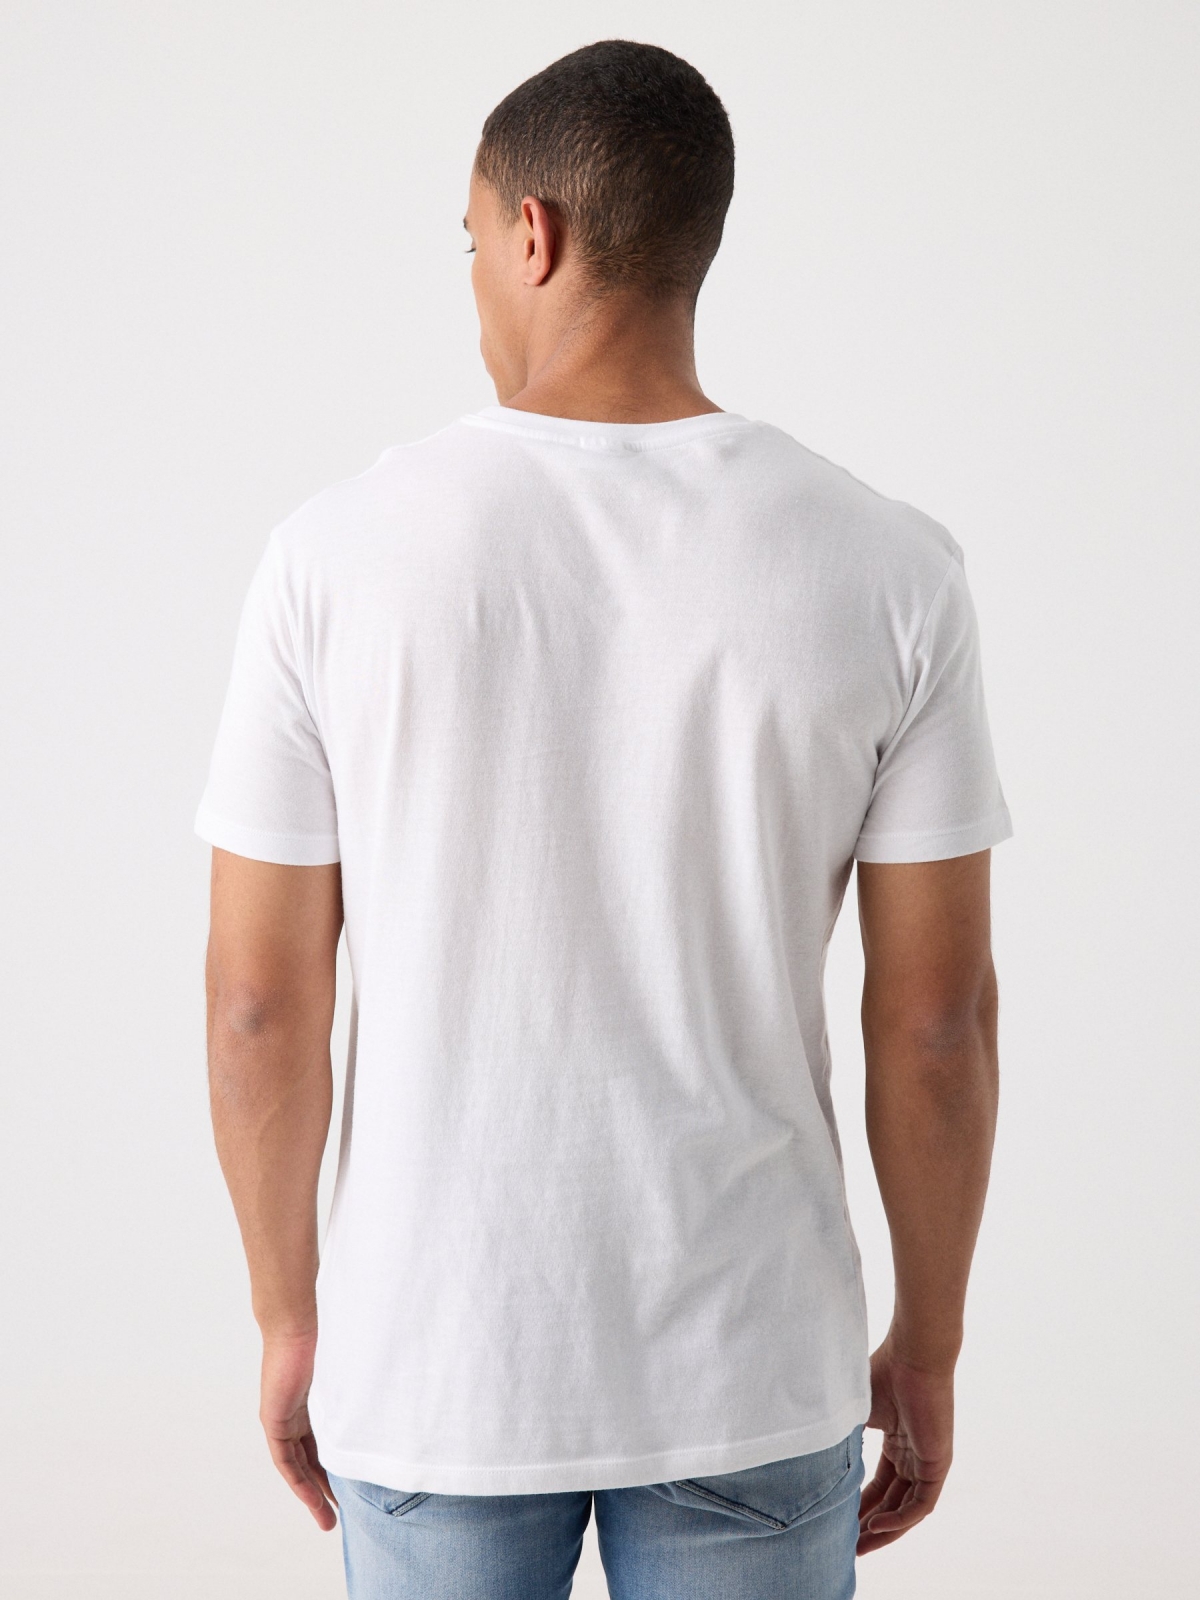 Camiseta estampado pantera negra blanco vista media trasera